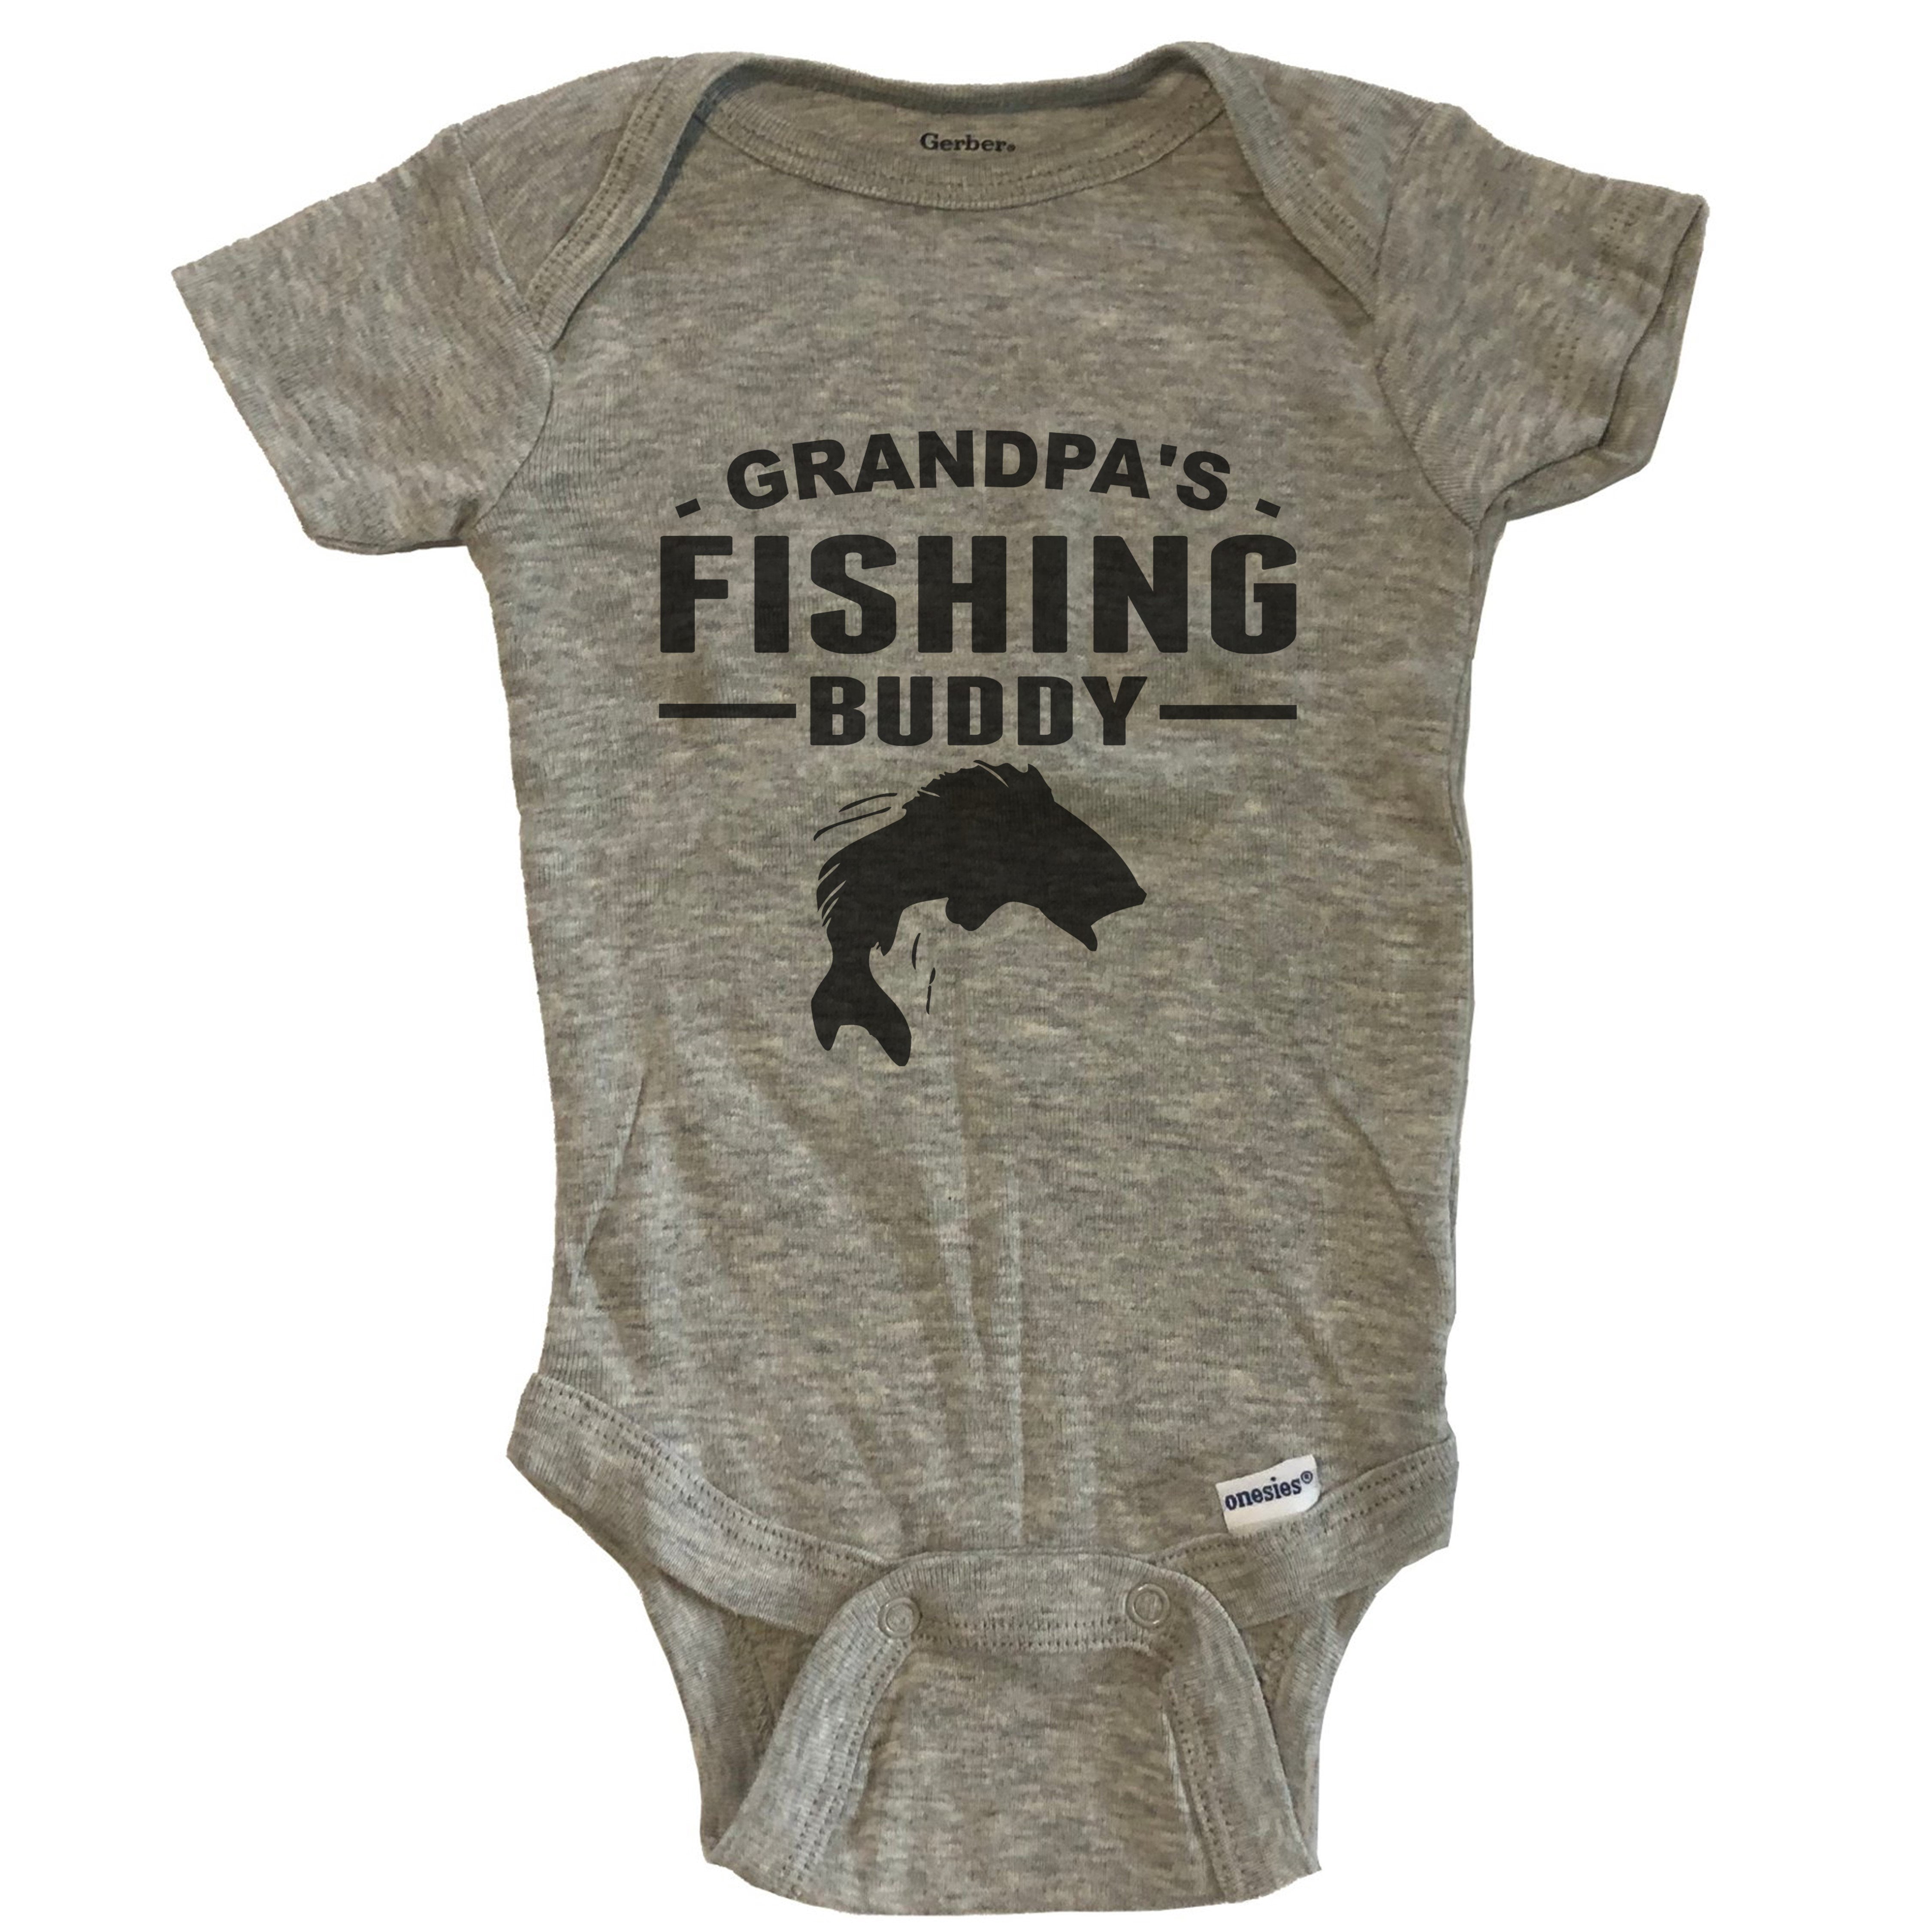 Grandpa's Fishing Buddy Cute Fishing Baby Bodysuit for Grandchild - Grey 